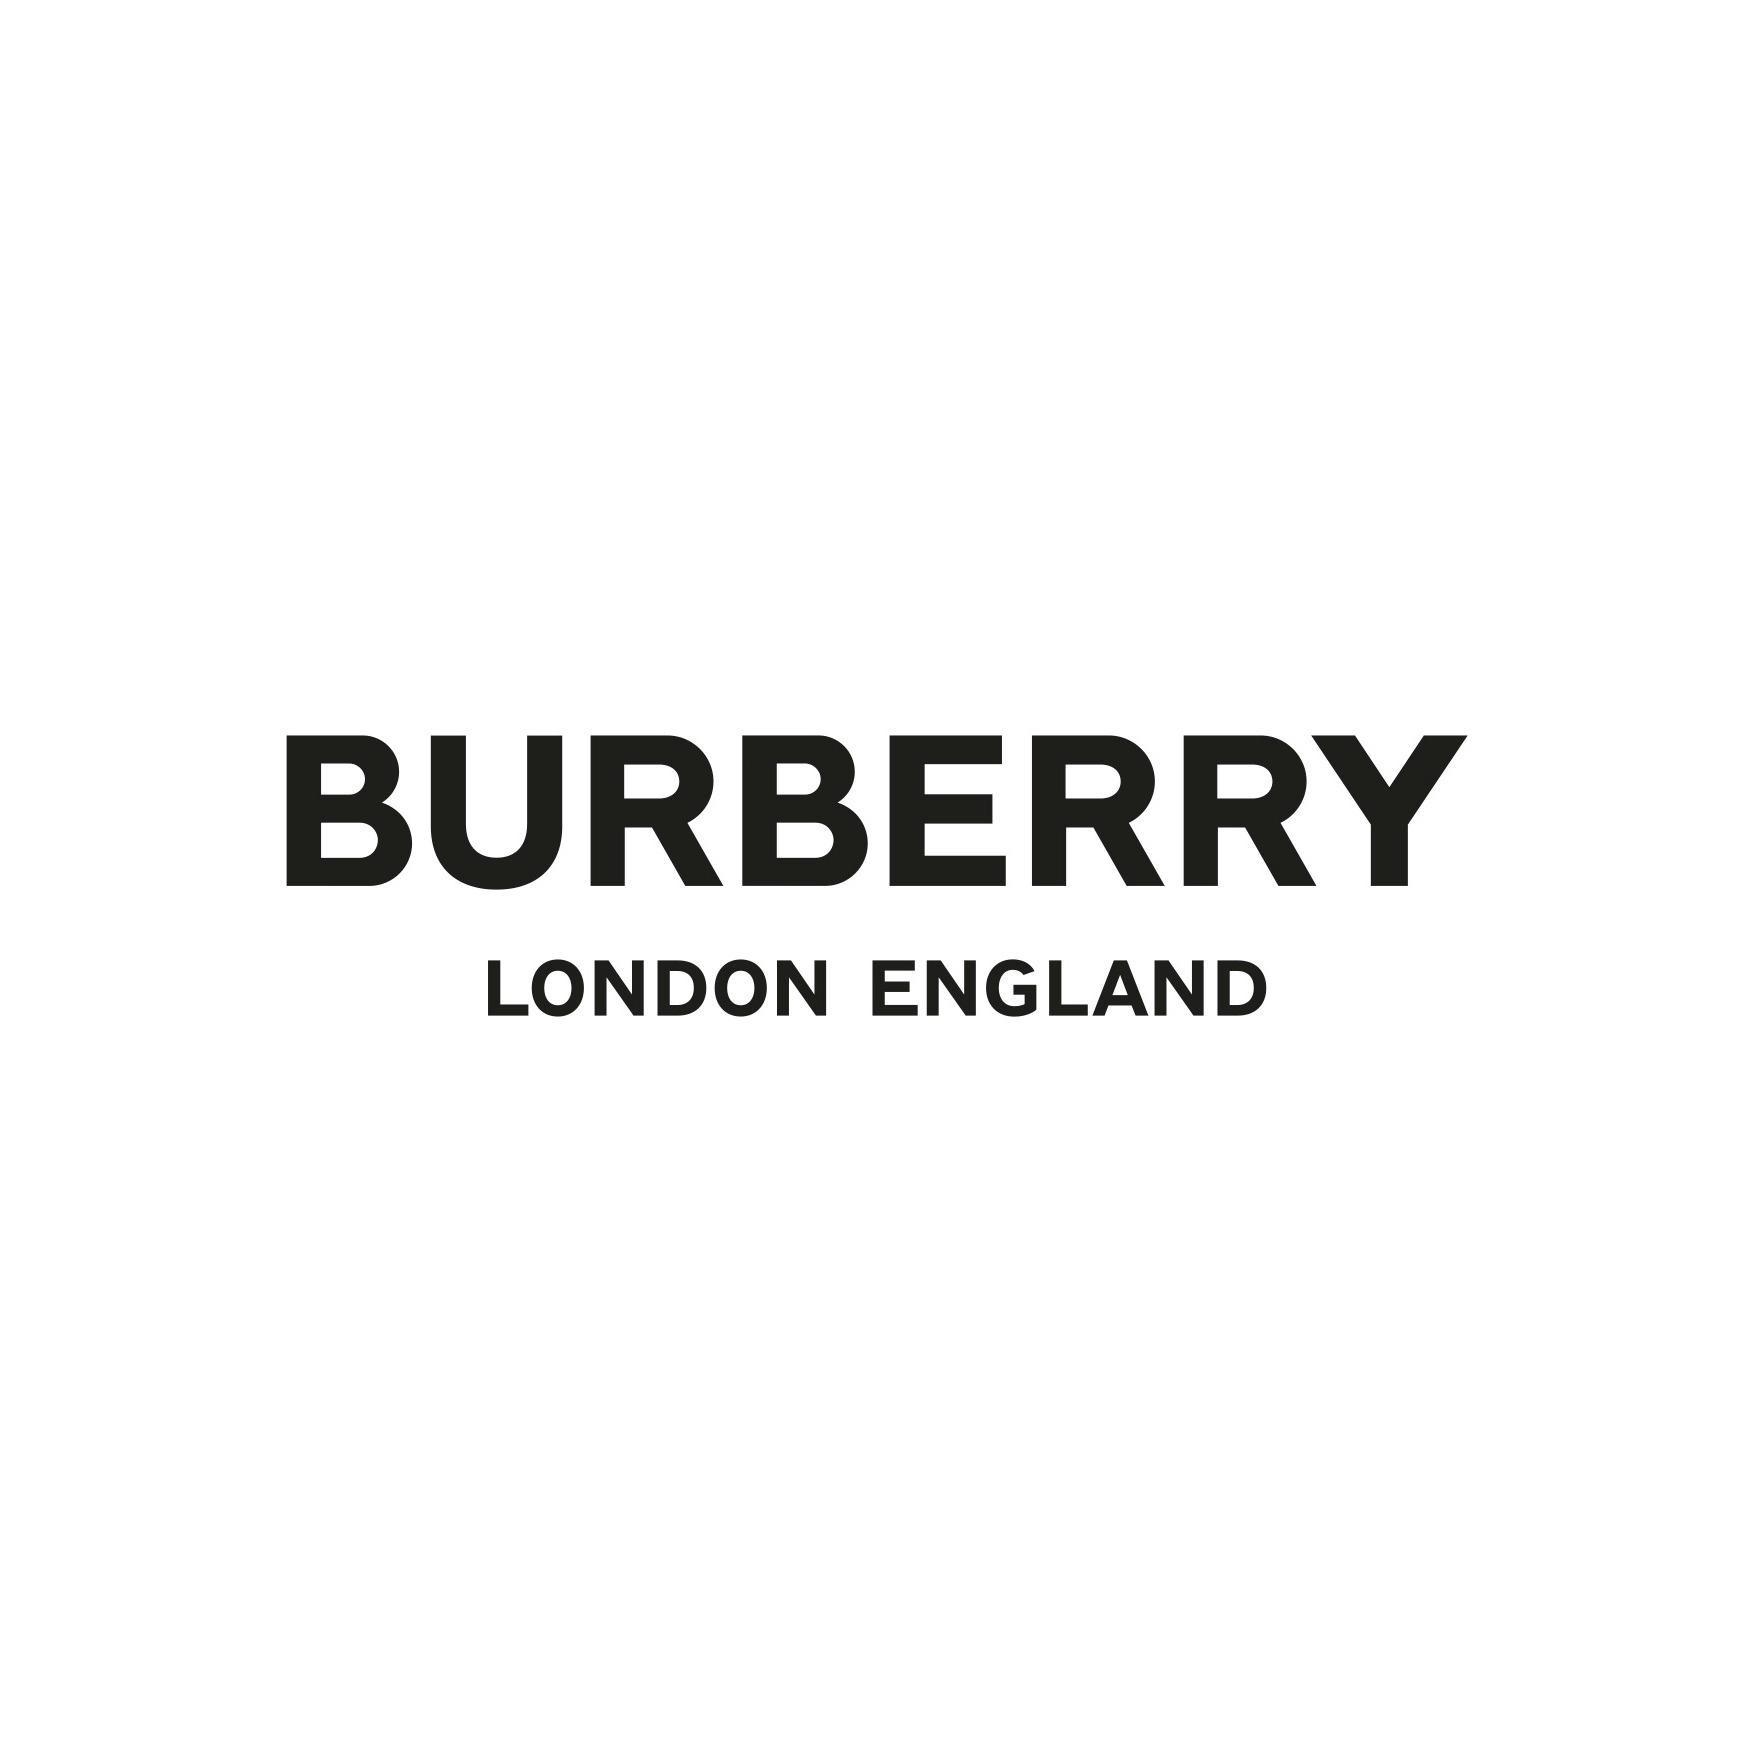 Burberry - Closed - Grossistes et fabricants de vêtements